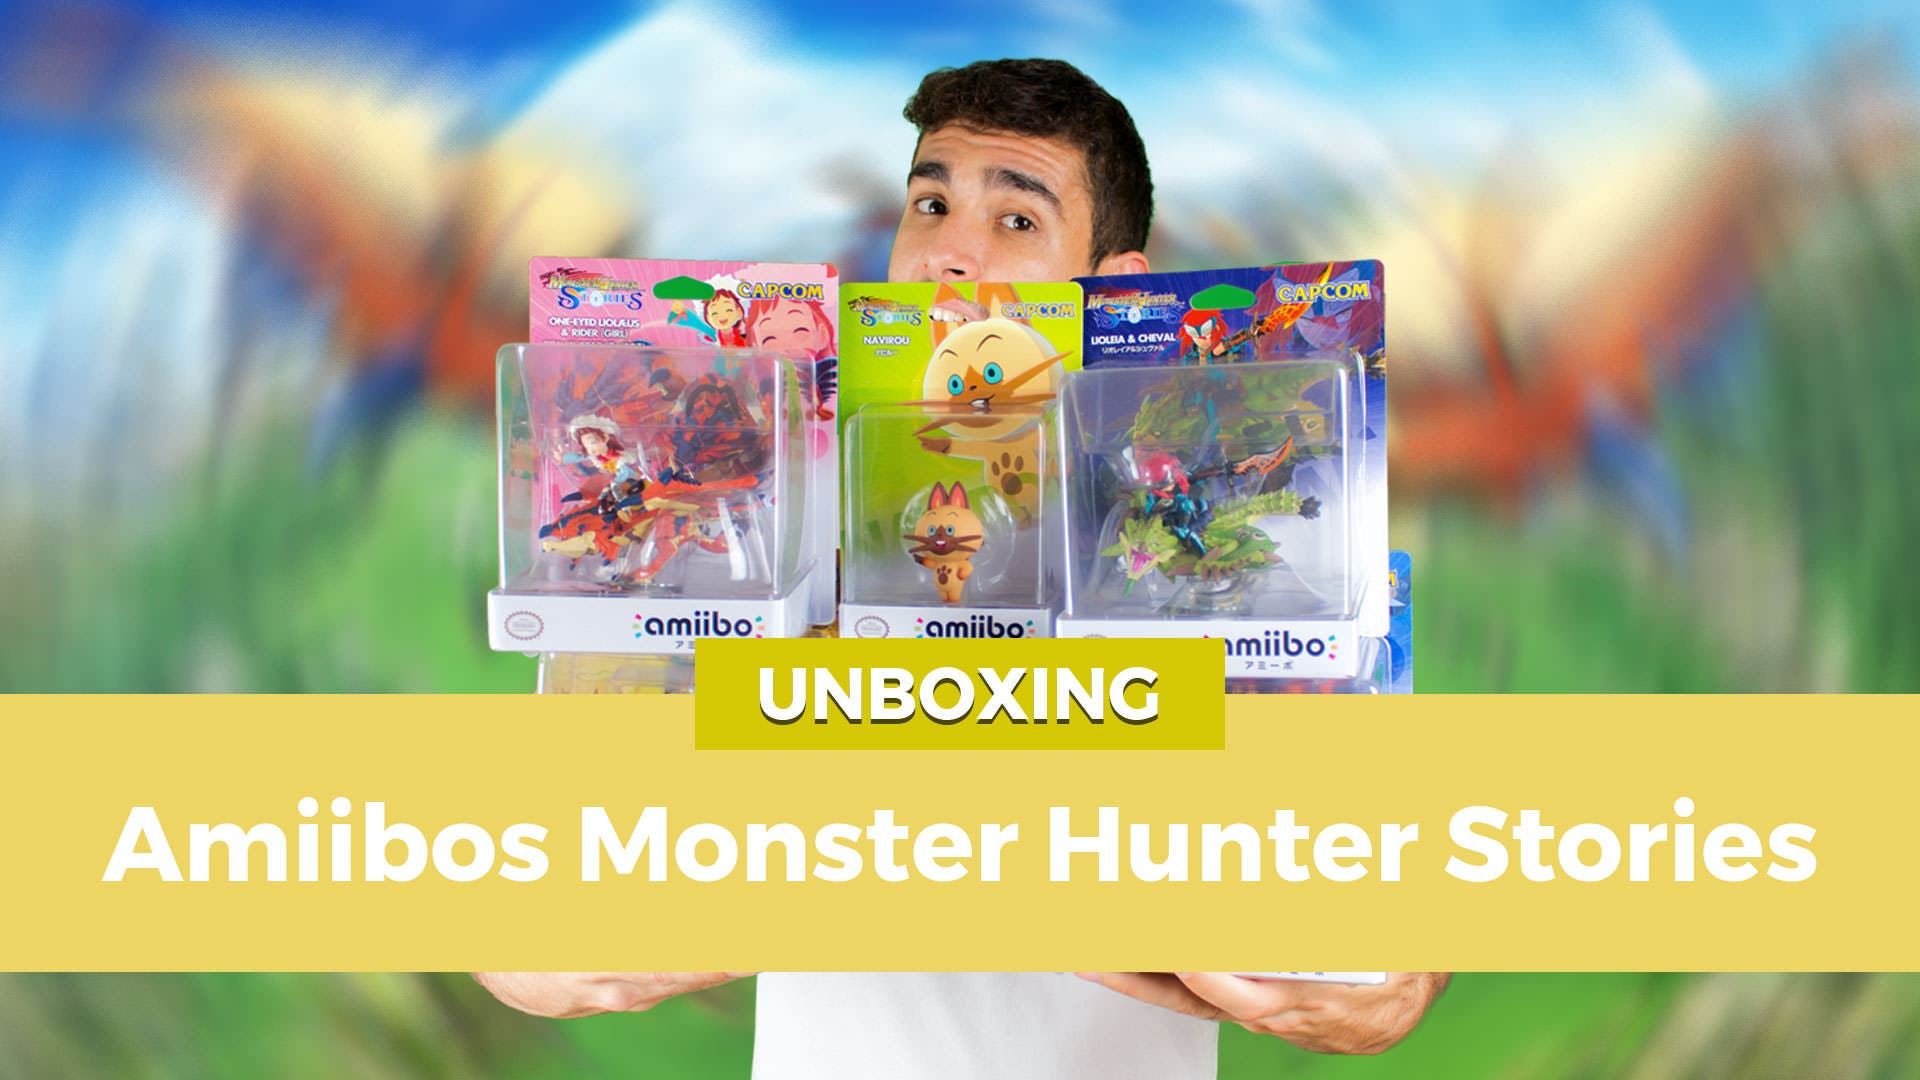 [Vídeo] Unboxing salvaje de los amiibo de Monster Hunter Stories